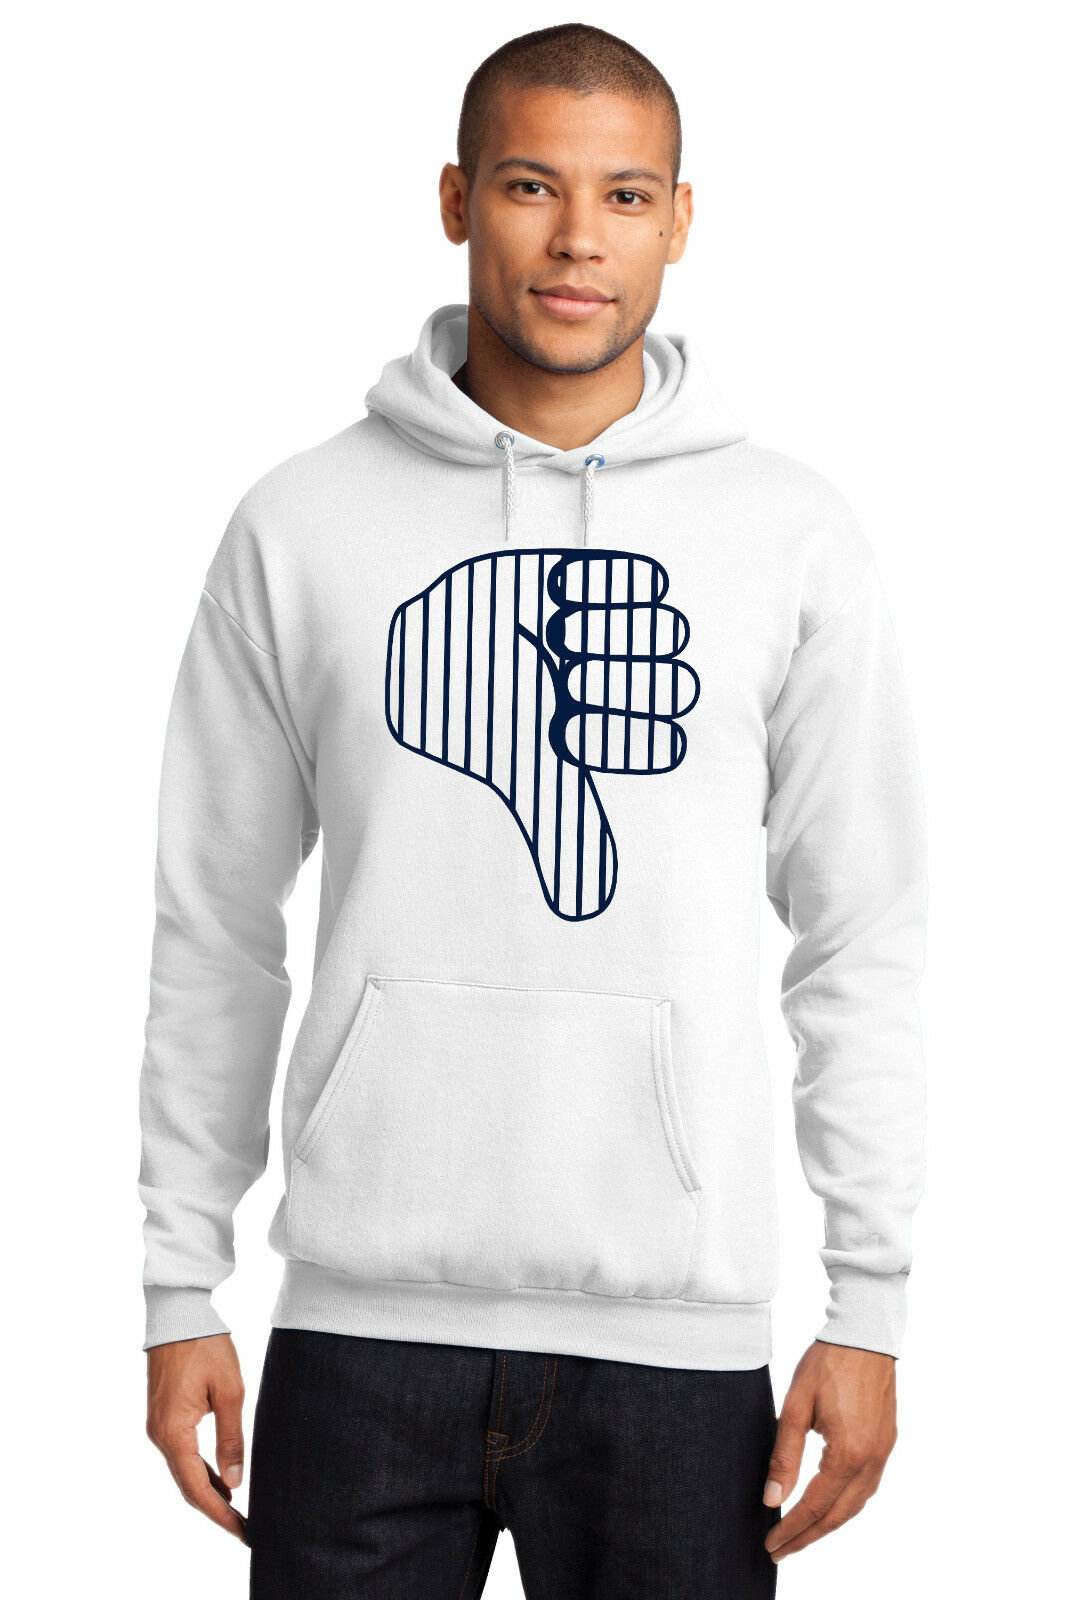 New York Yankees Thumbs Down Men's T-Shirt or Hoodie Sz s - 5XL Pinstriped